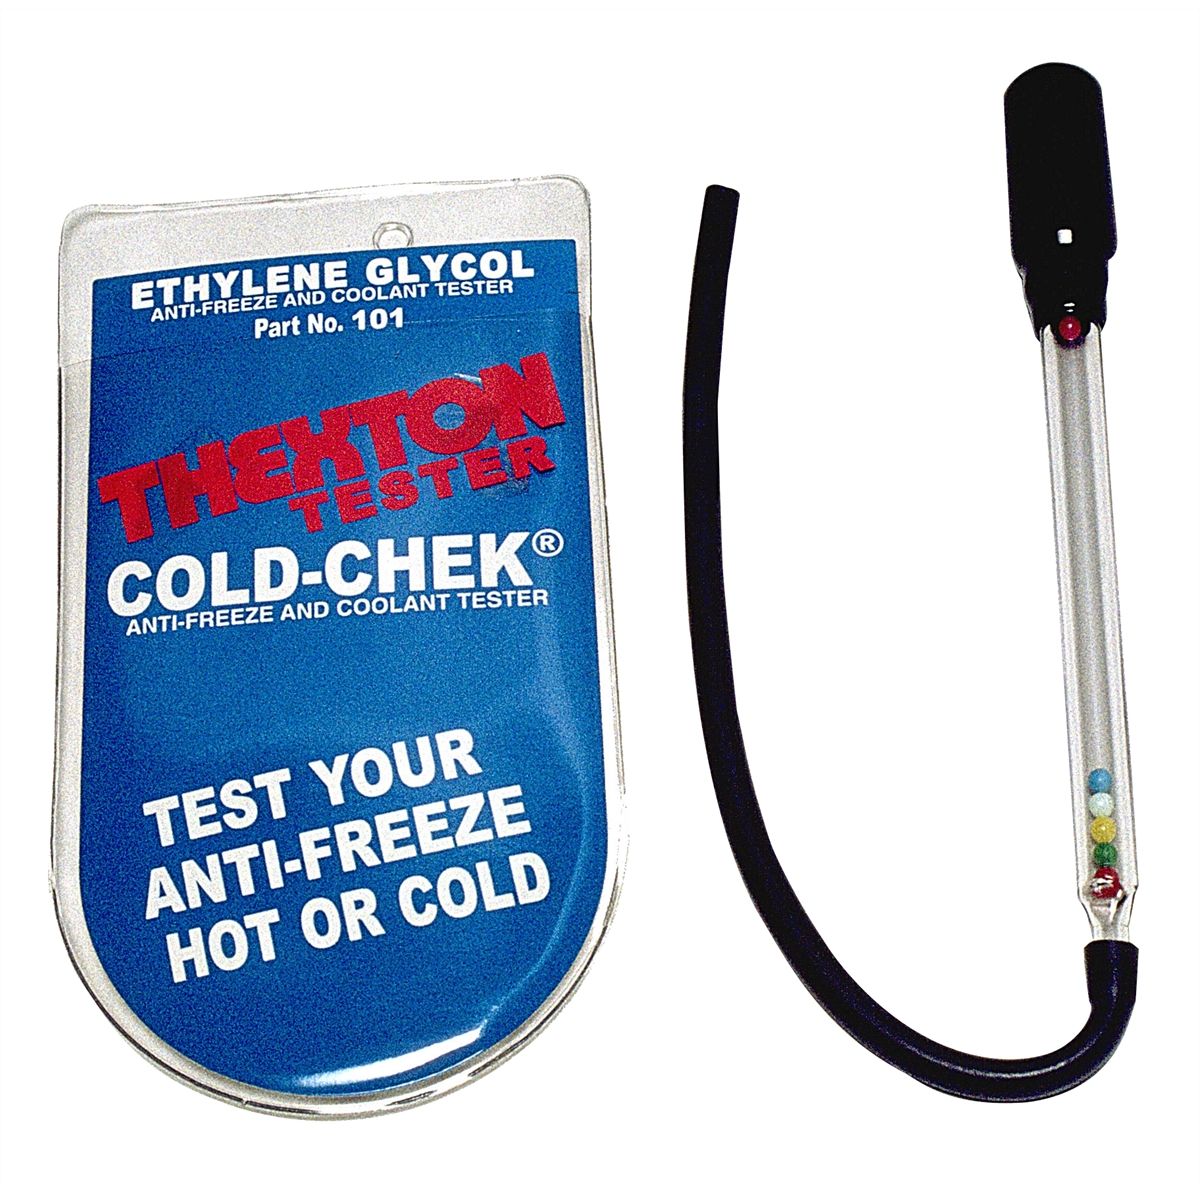 Cold-Chek` Anti-Freeze / Coolant Tester